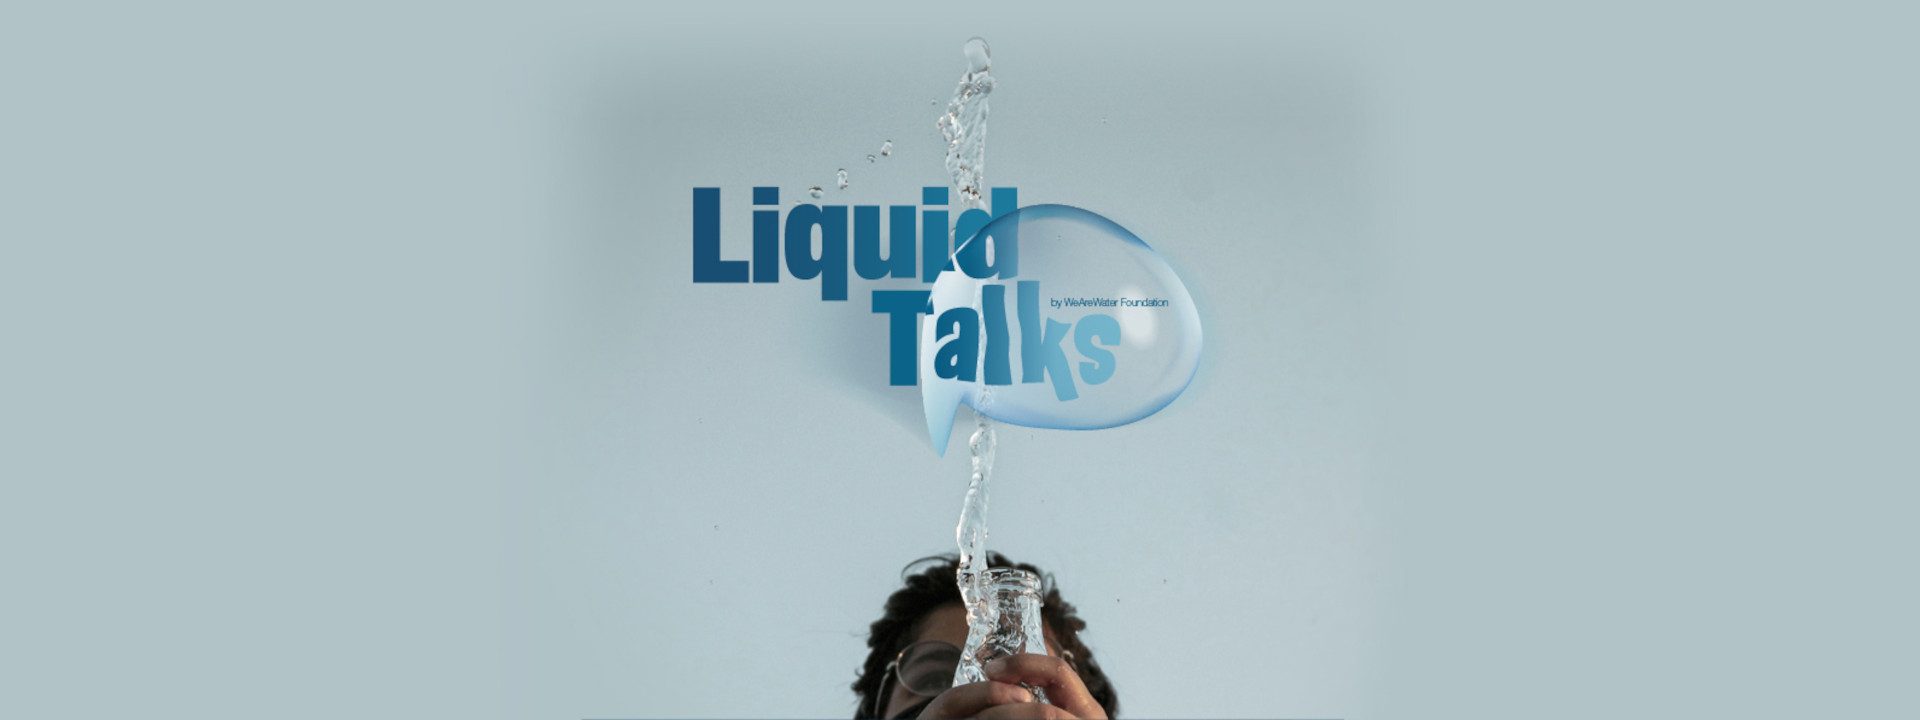 Liquid Talks